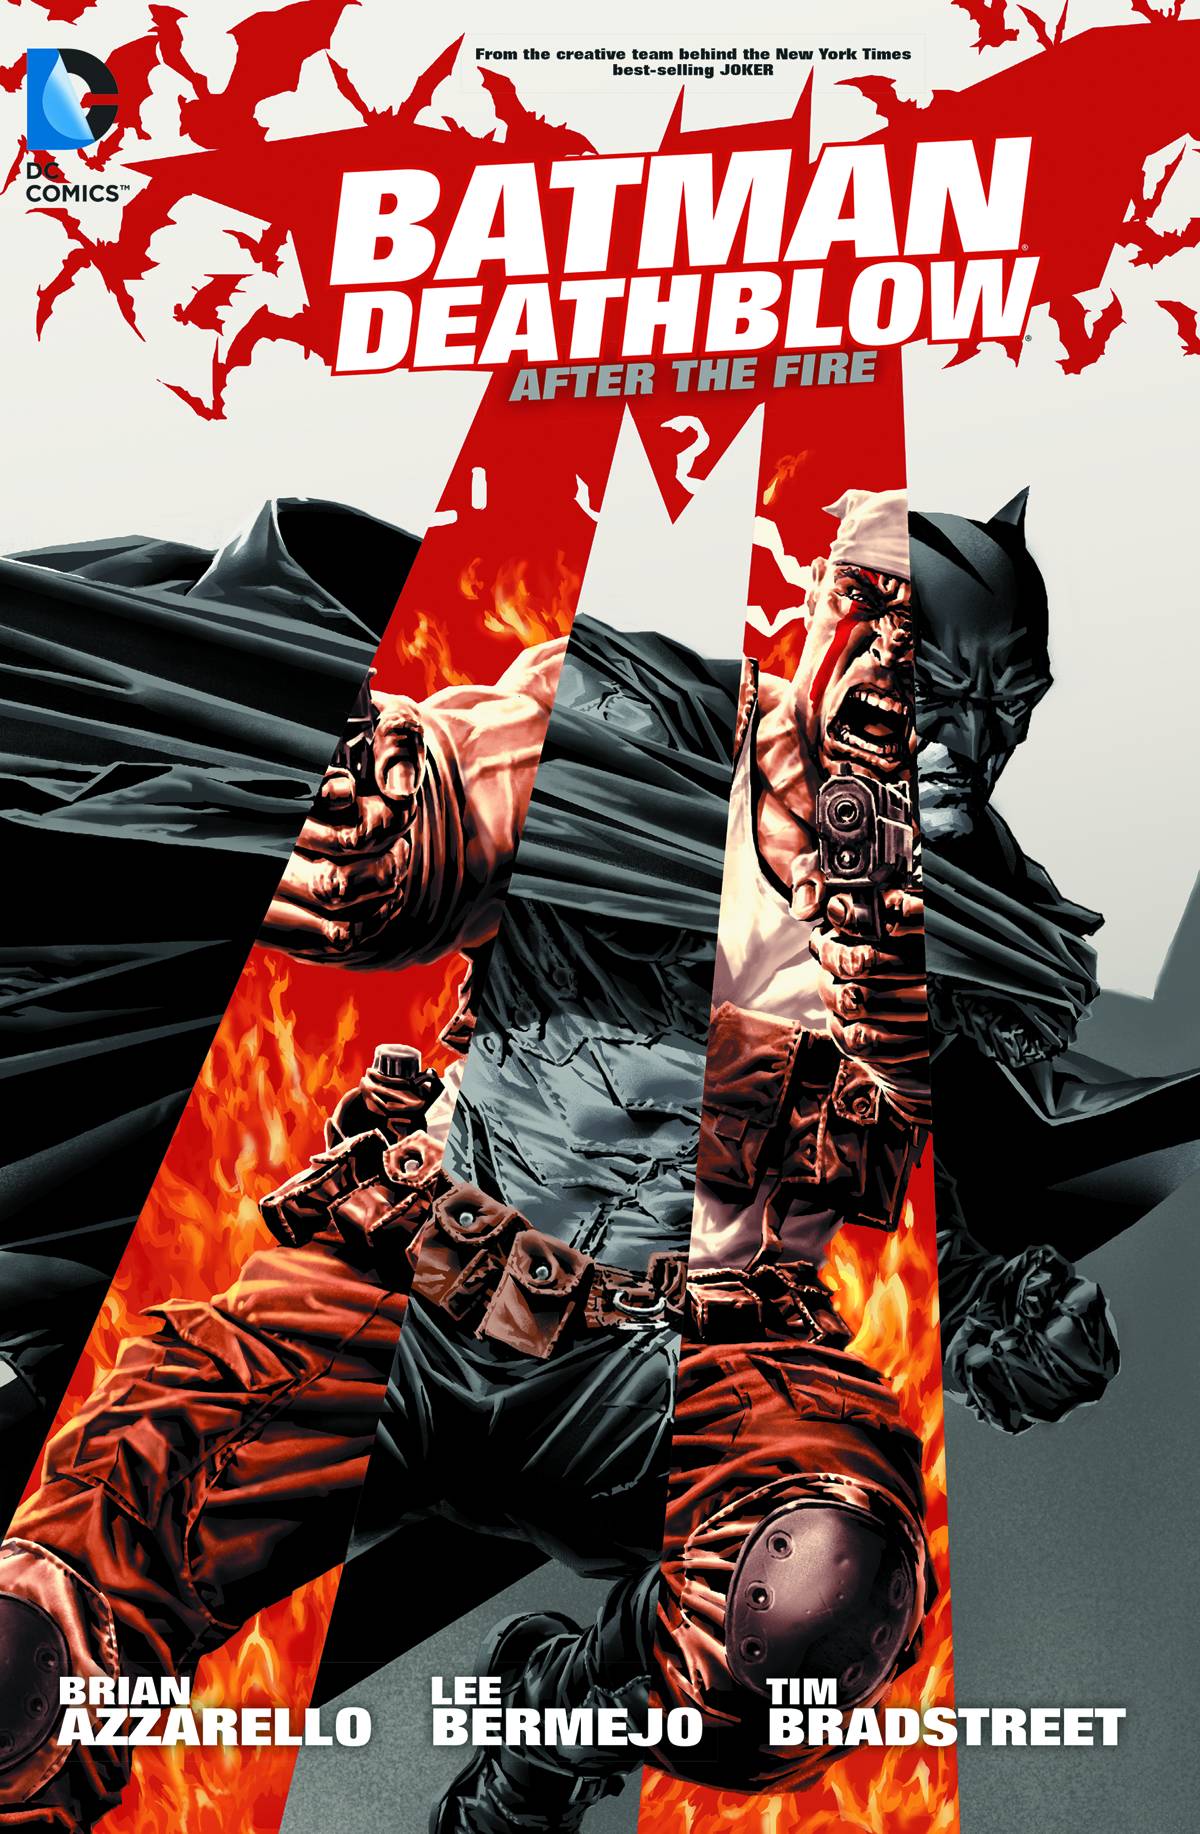 Batman Deathblow After the Fire Graphic Novel